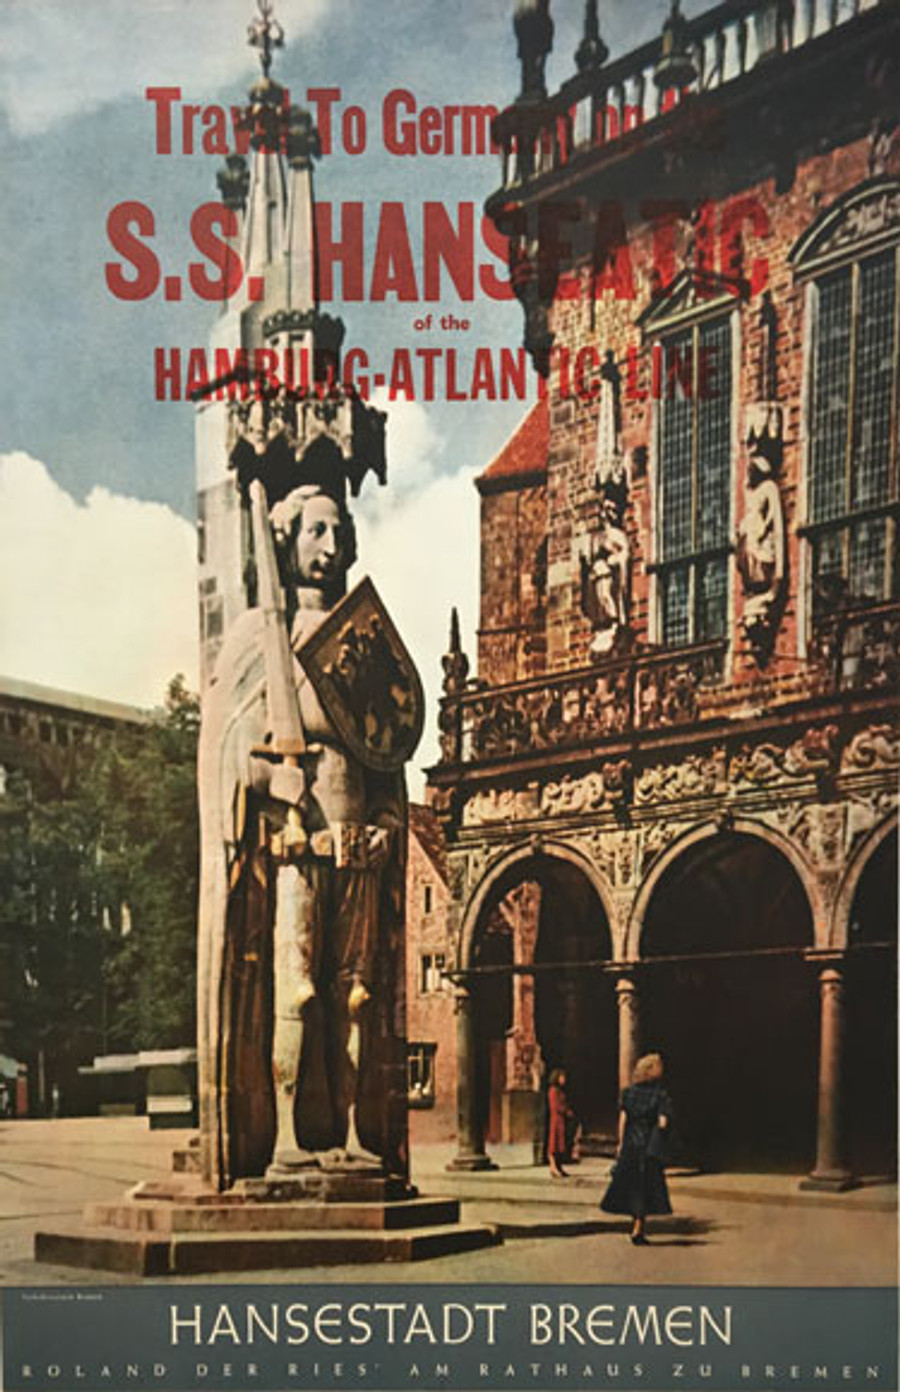 Germany by S S Hanseatic Hamburg Atlantic Line original 1958 vintage travel poster depicts town hall in Bremen